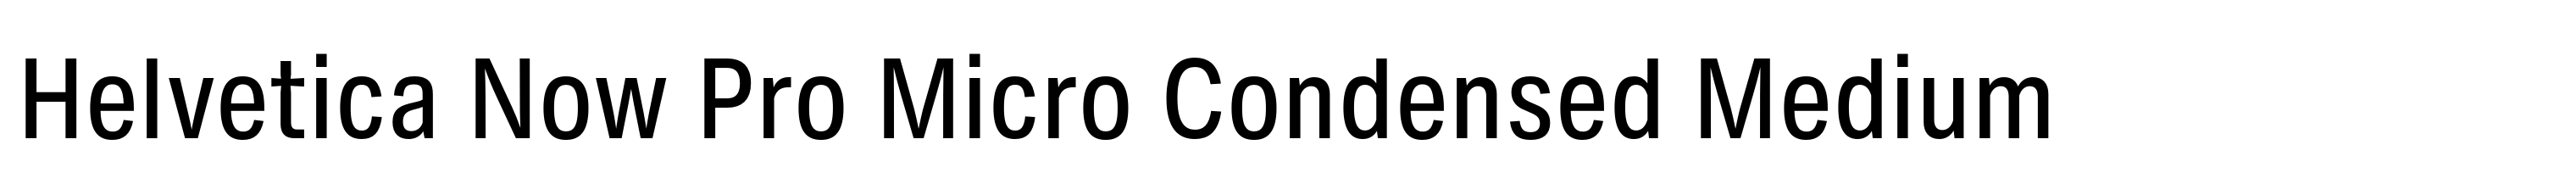 Helvetica Now Pro Micro Condensed Medium